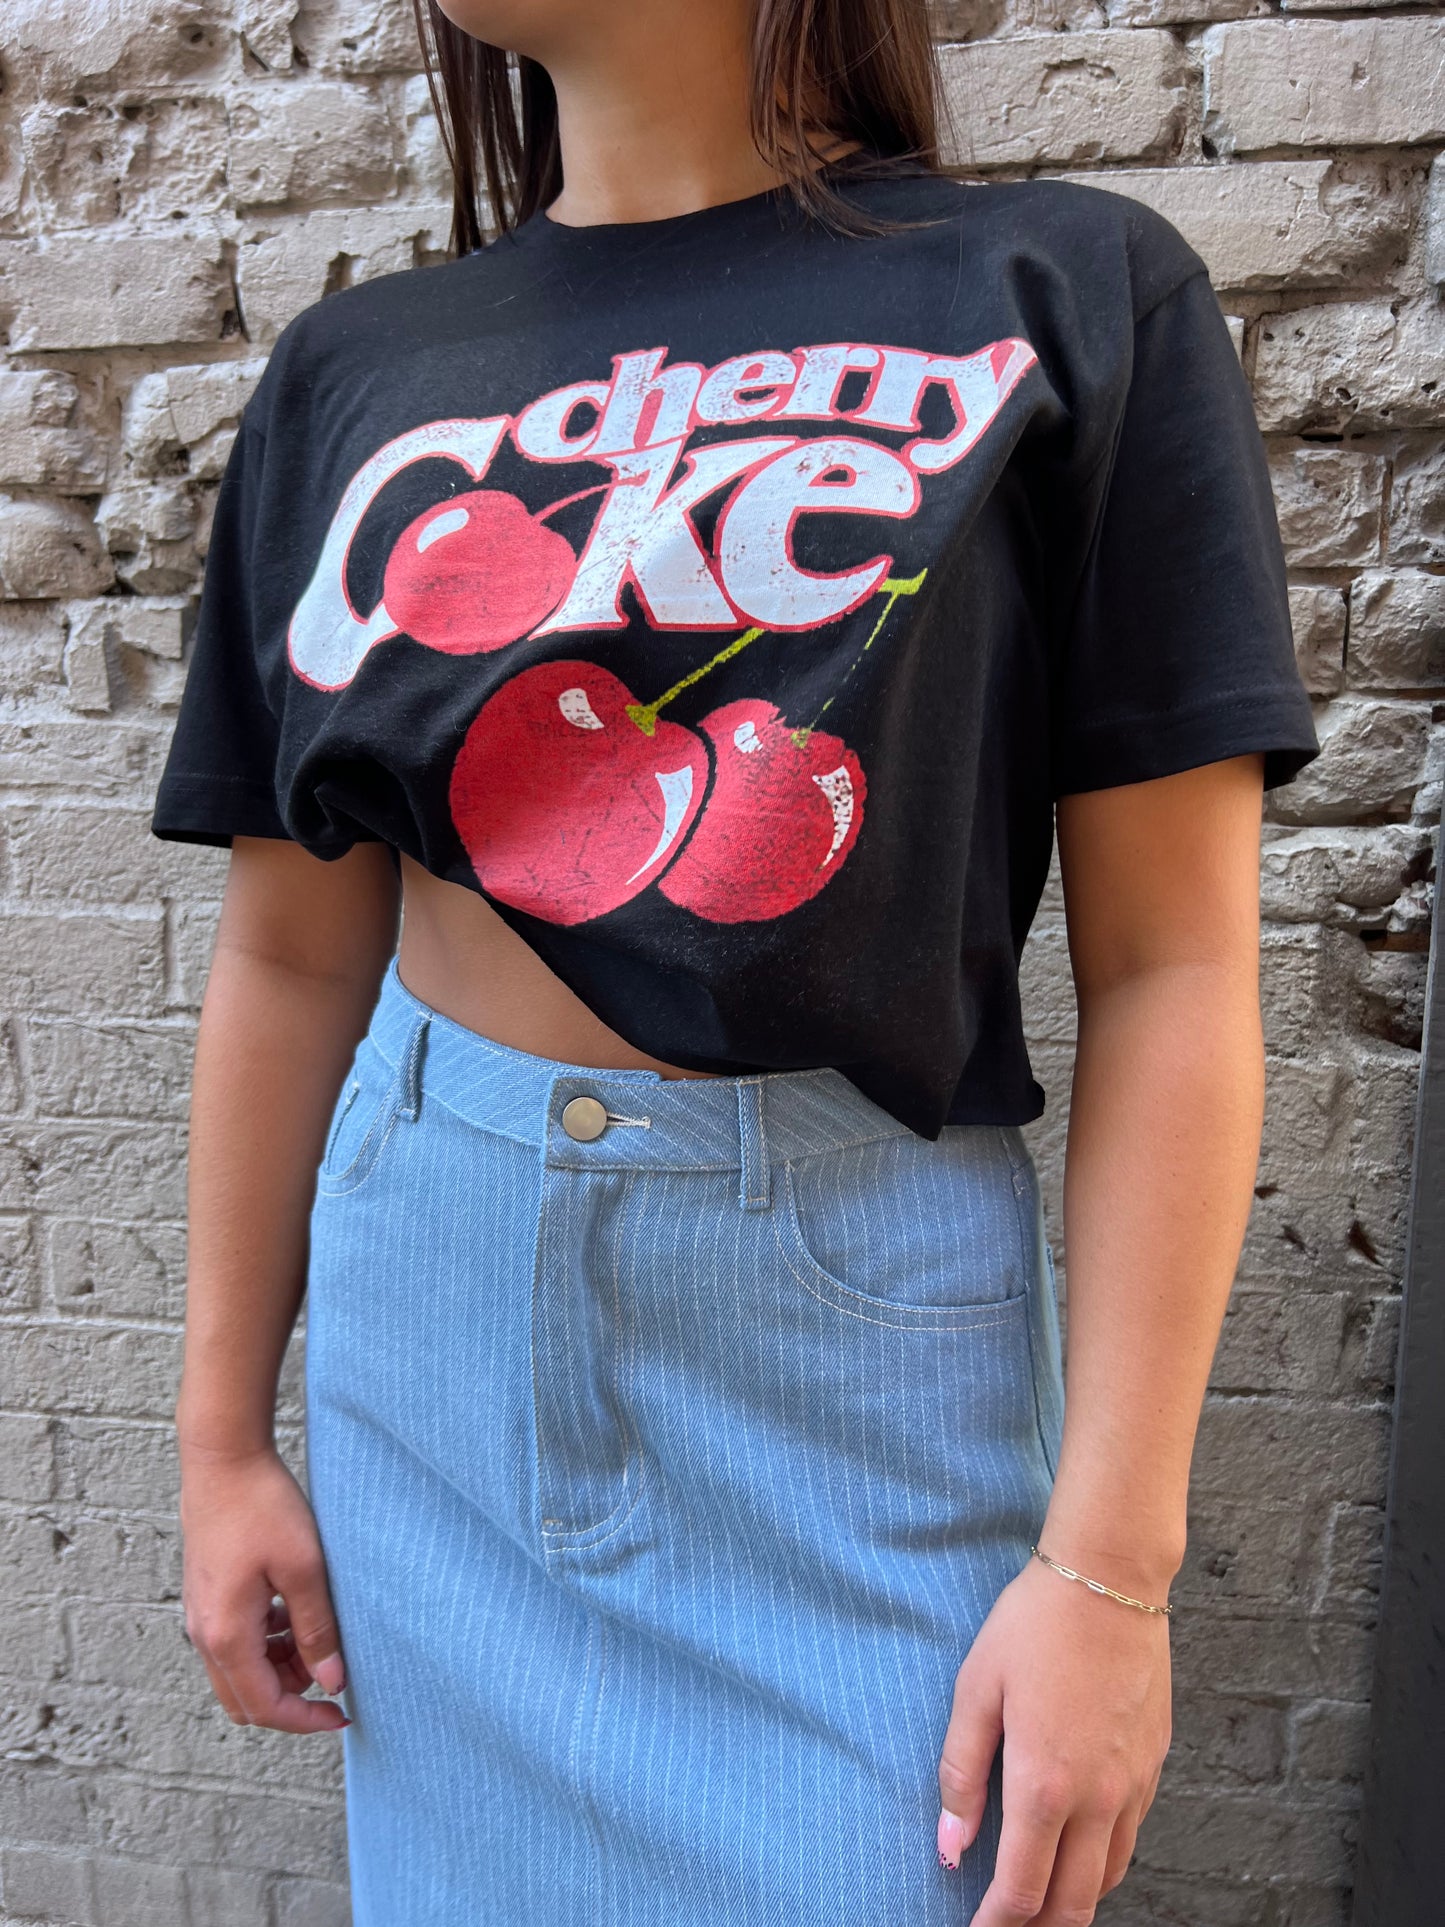 cherry coke graphics tshirt